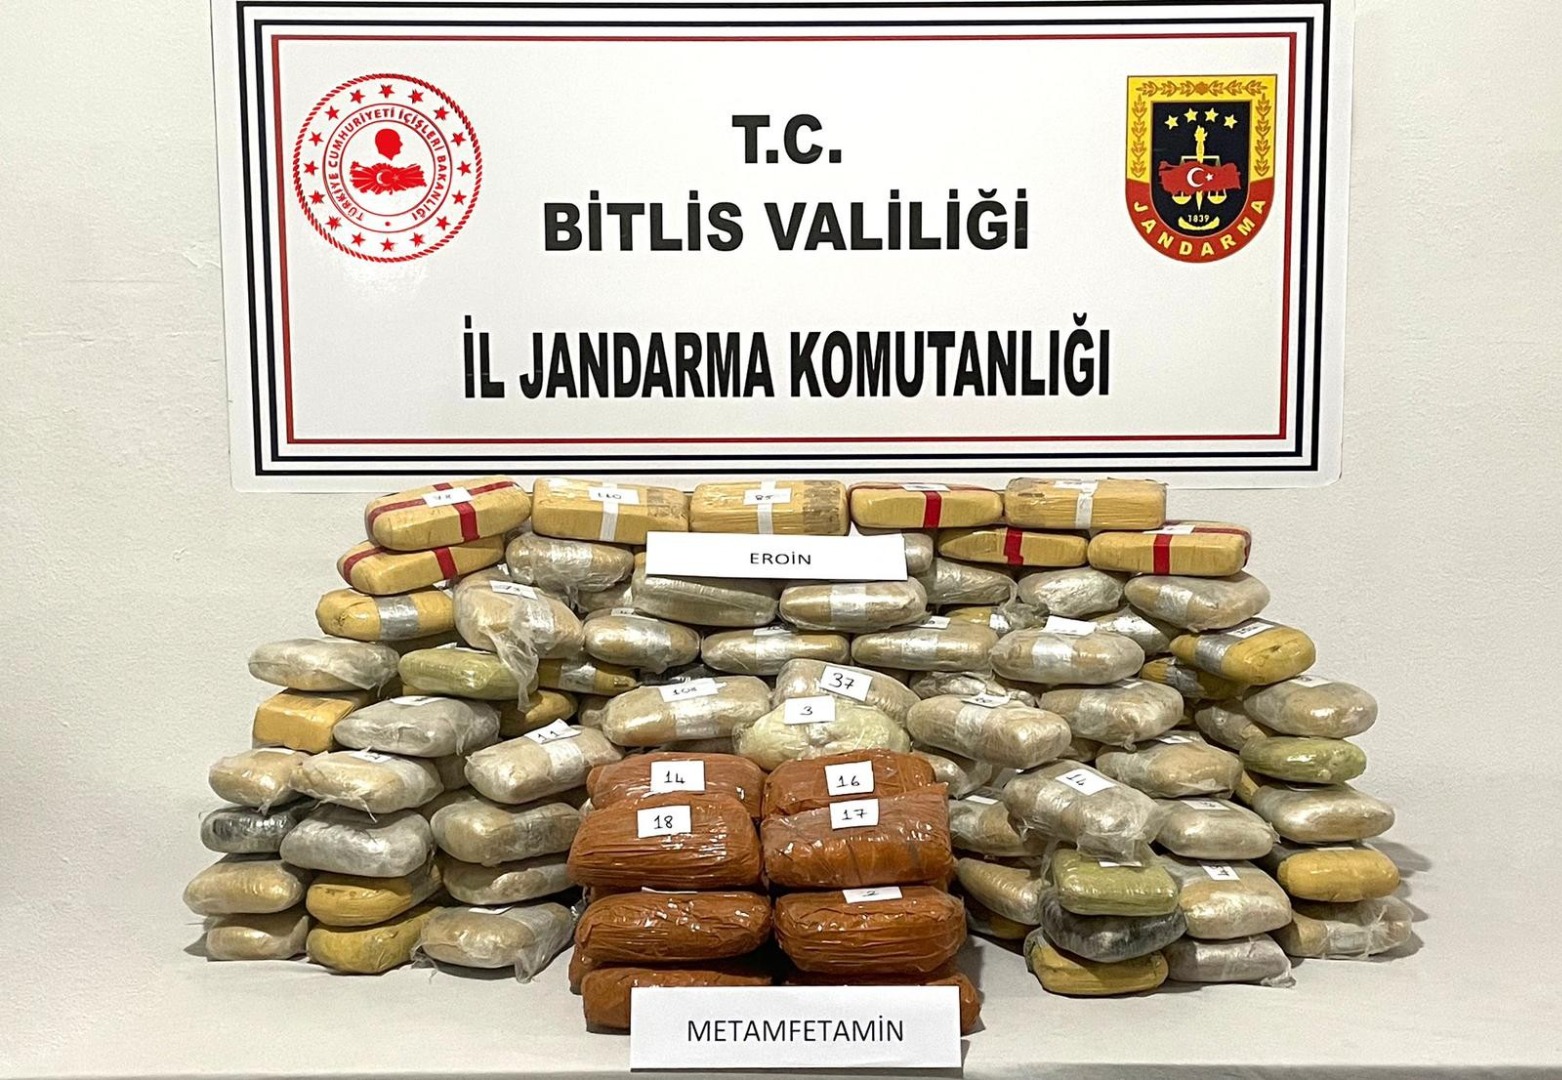 Bitlis’te 89 kilo uyuşturucu geçirildi